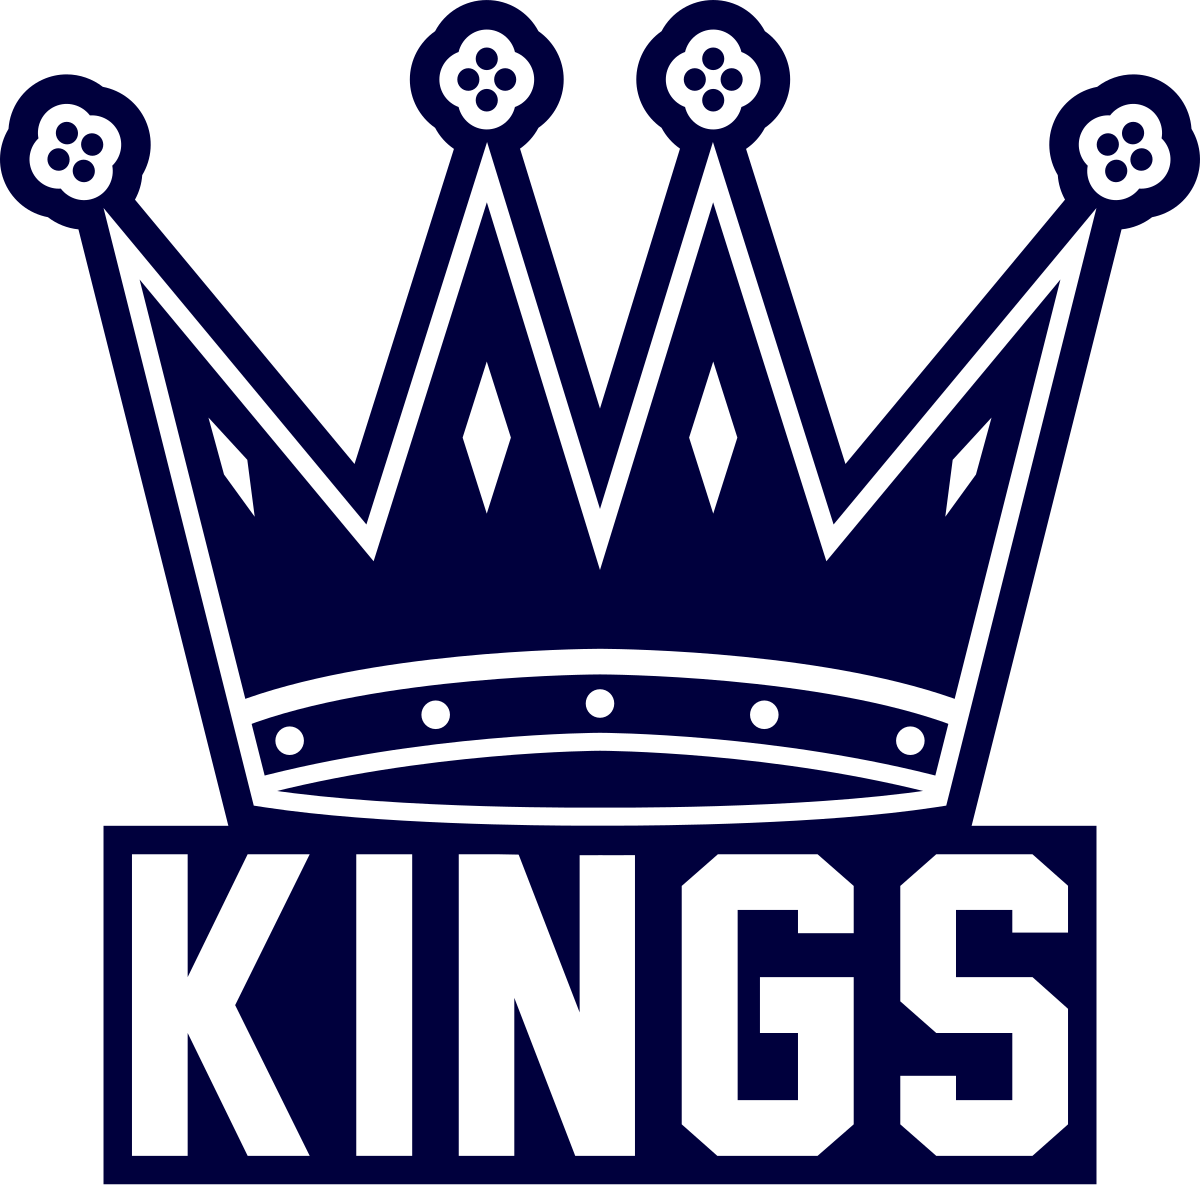 King logo. Кинг лого. Логотип с надписью Кинг. Аватарка с прозрачным фоном Кинг. Отряд короли надпись.